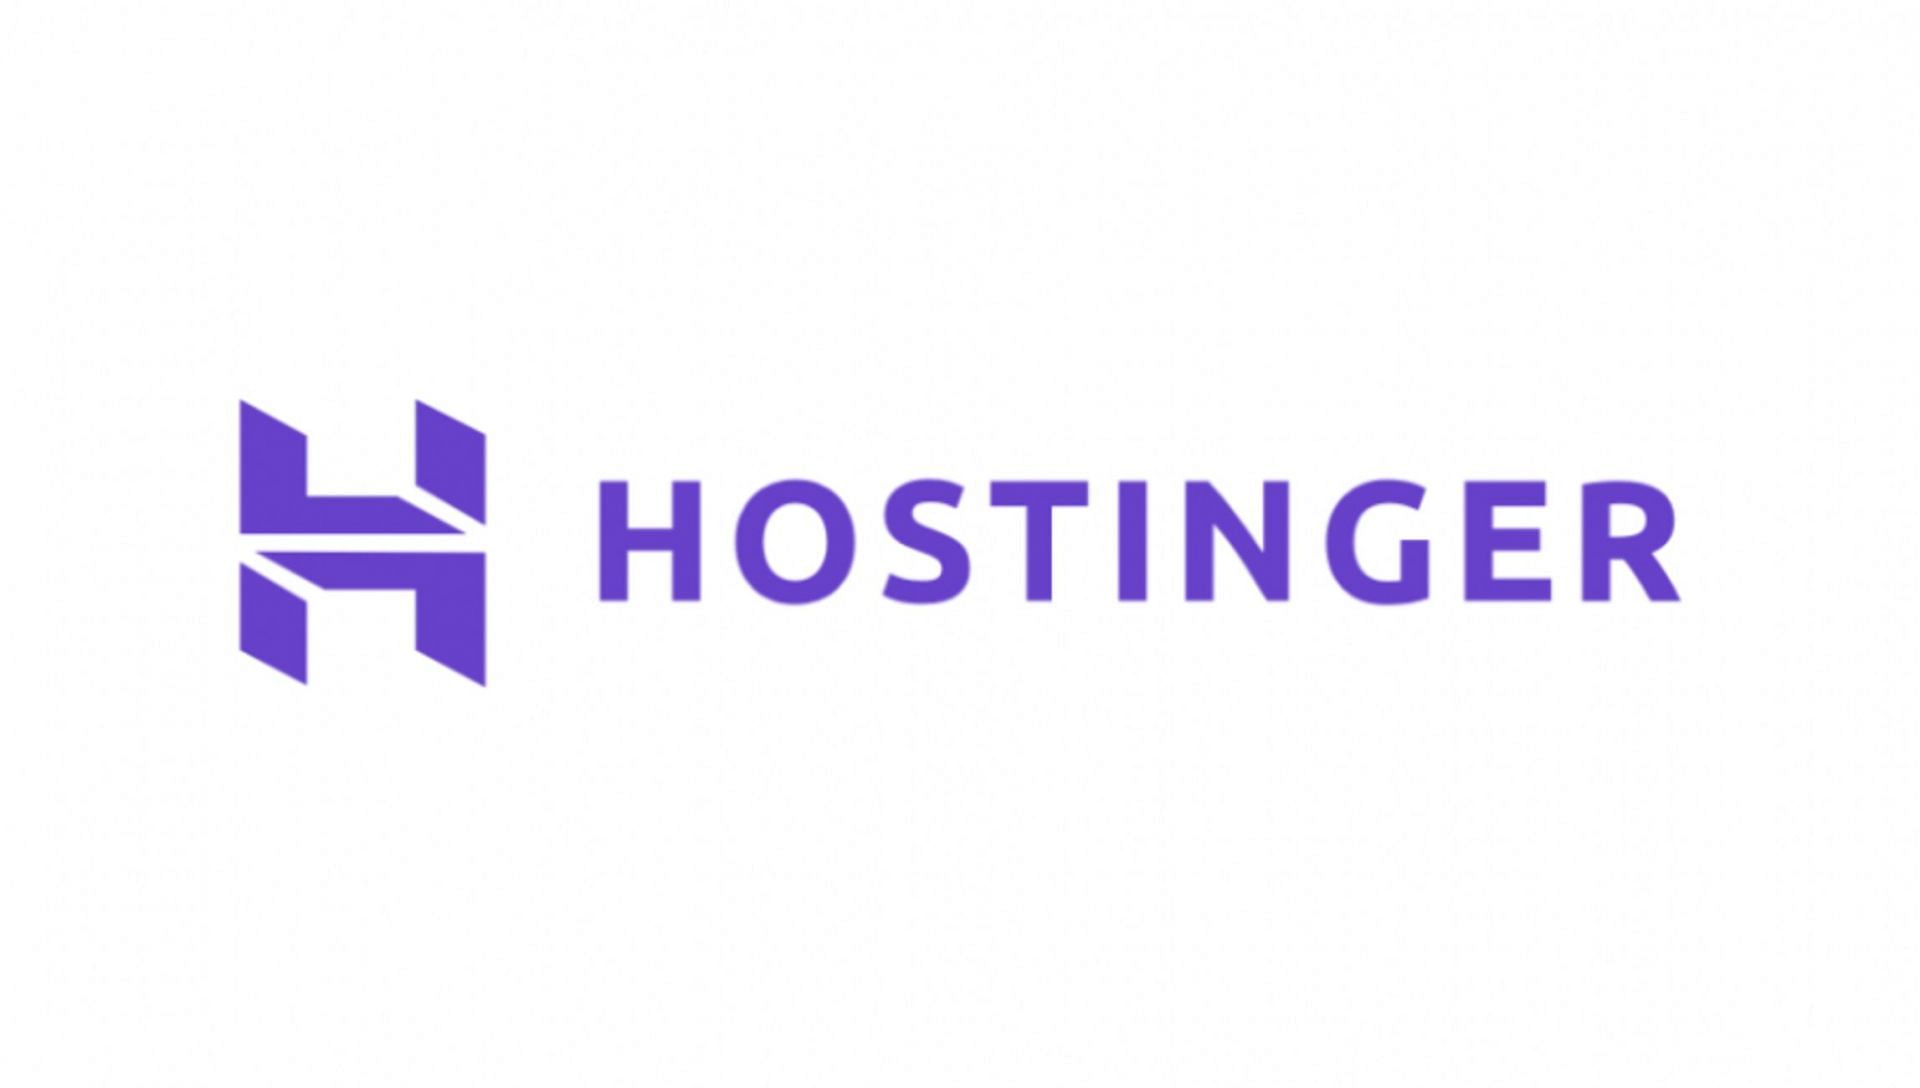 Hostinger offers a blend of accessibility, affordability, and powerful hosting tools (Image via Hostinger)